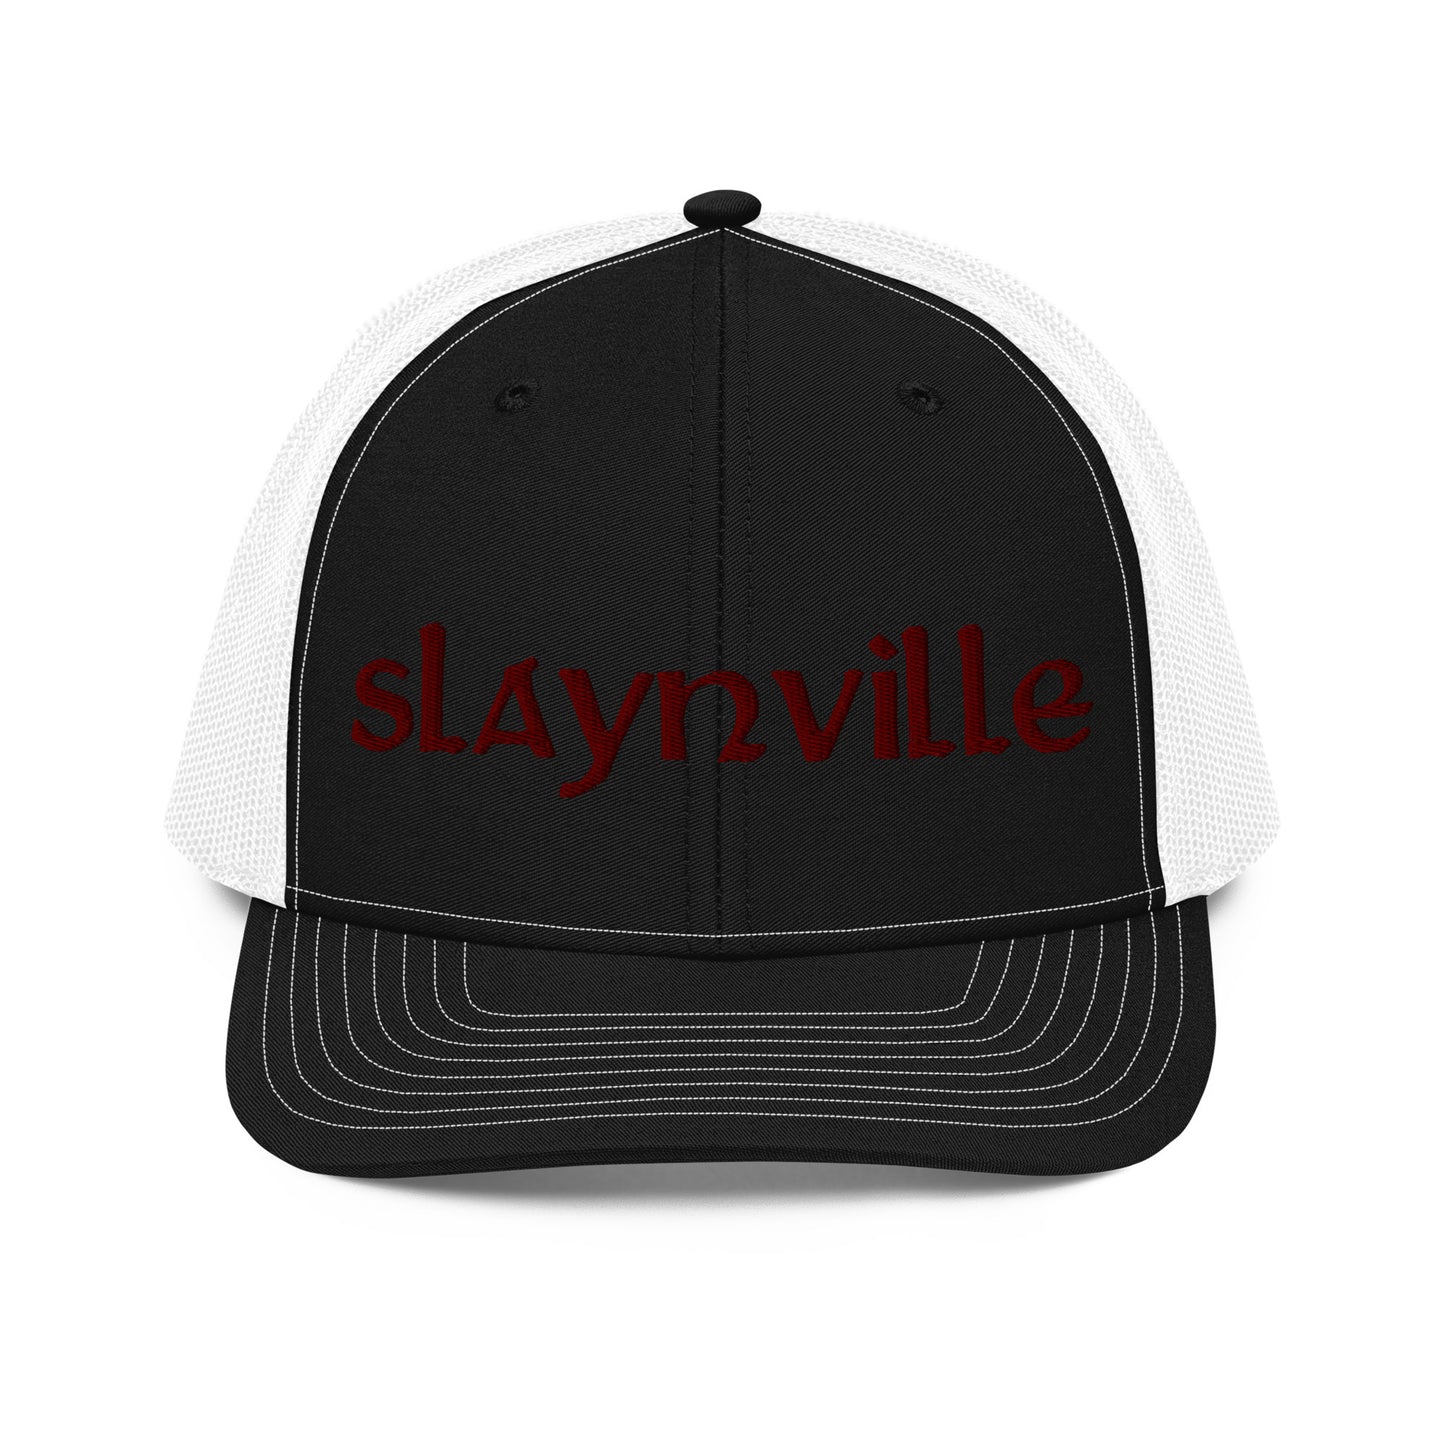 Slaynville Trucker Cap